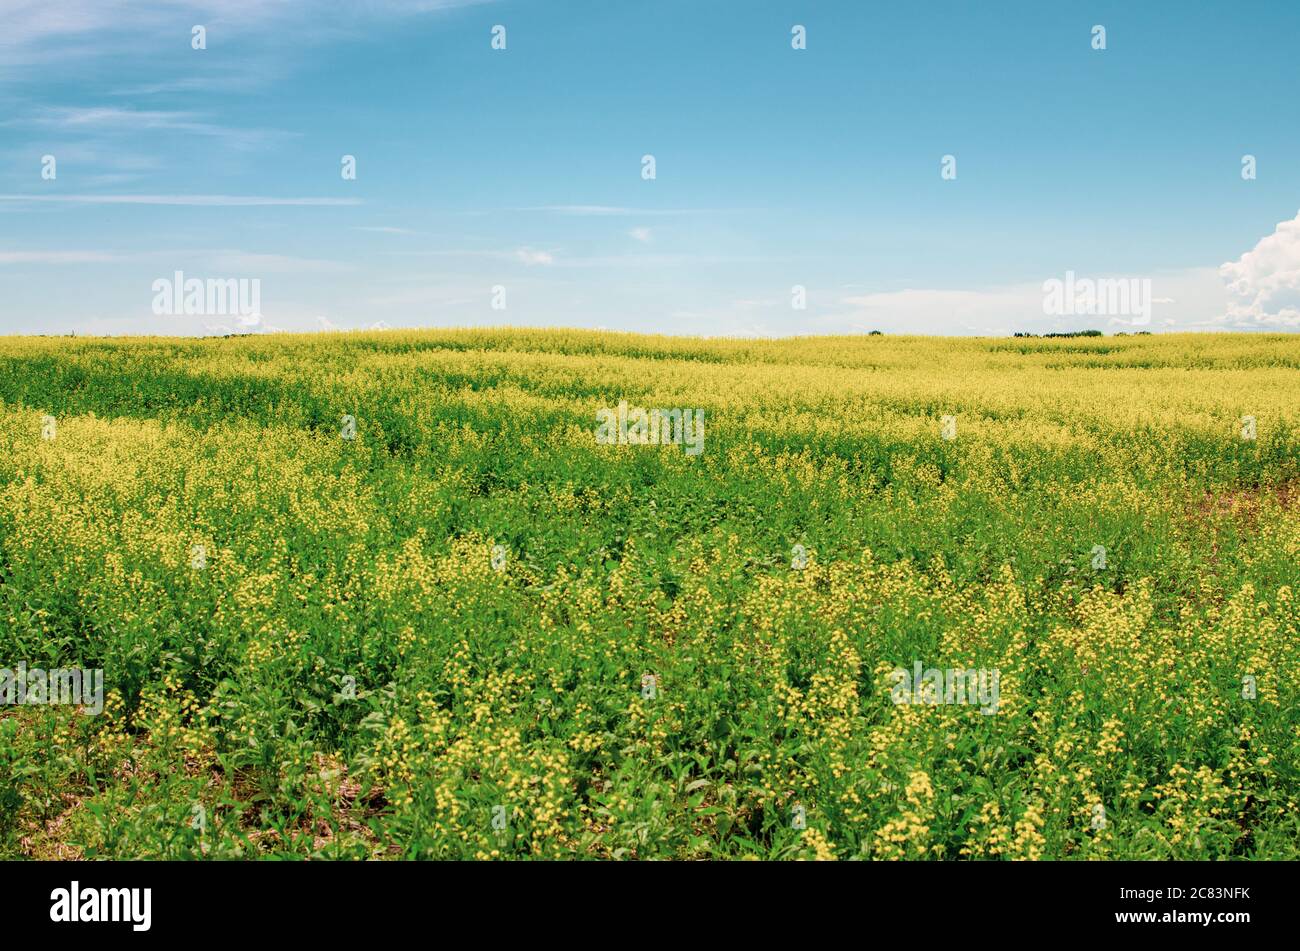 Vibrant yellow canola fields in rural Manitoba, Canada Stock Photo